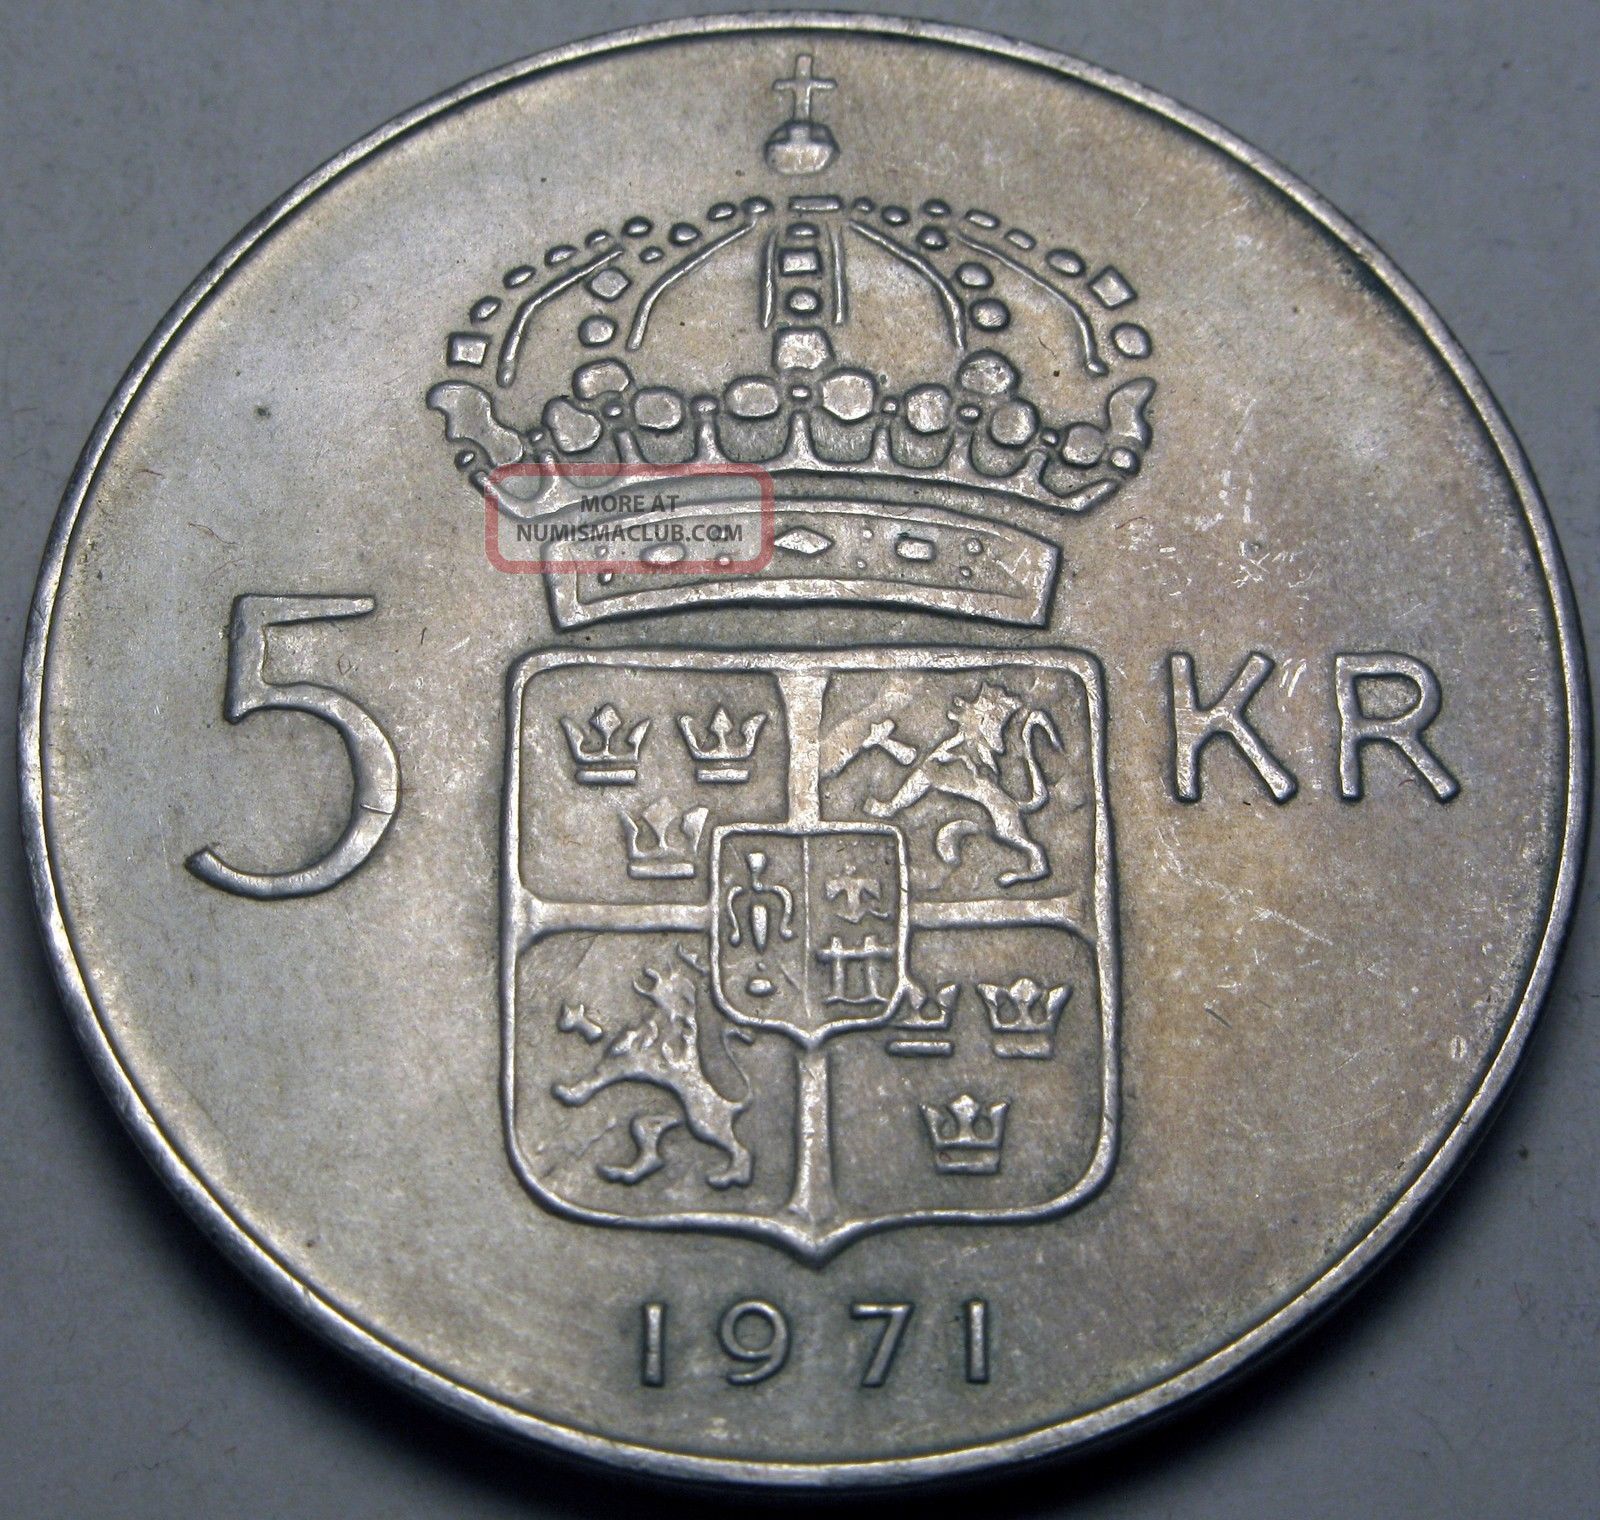 gustaf vi adolf coin 1969 value